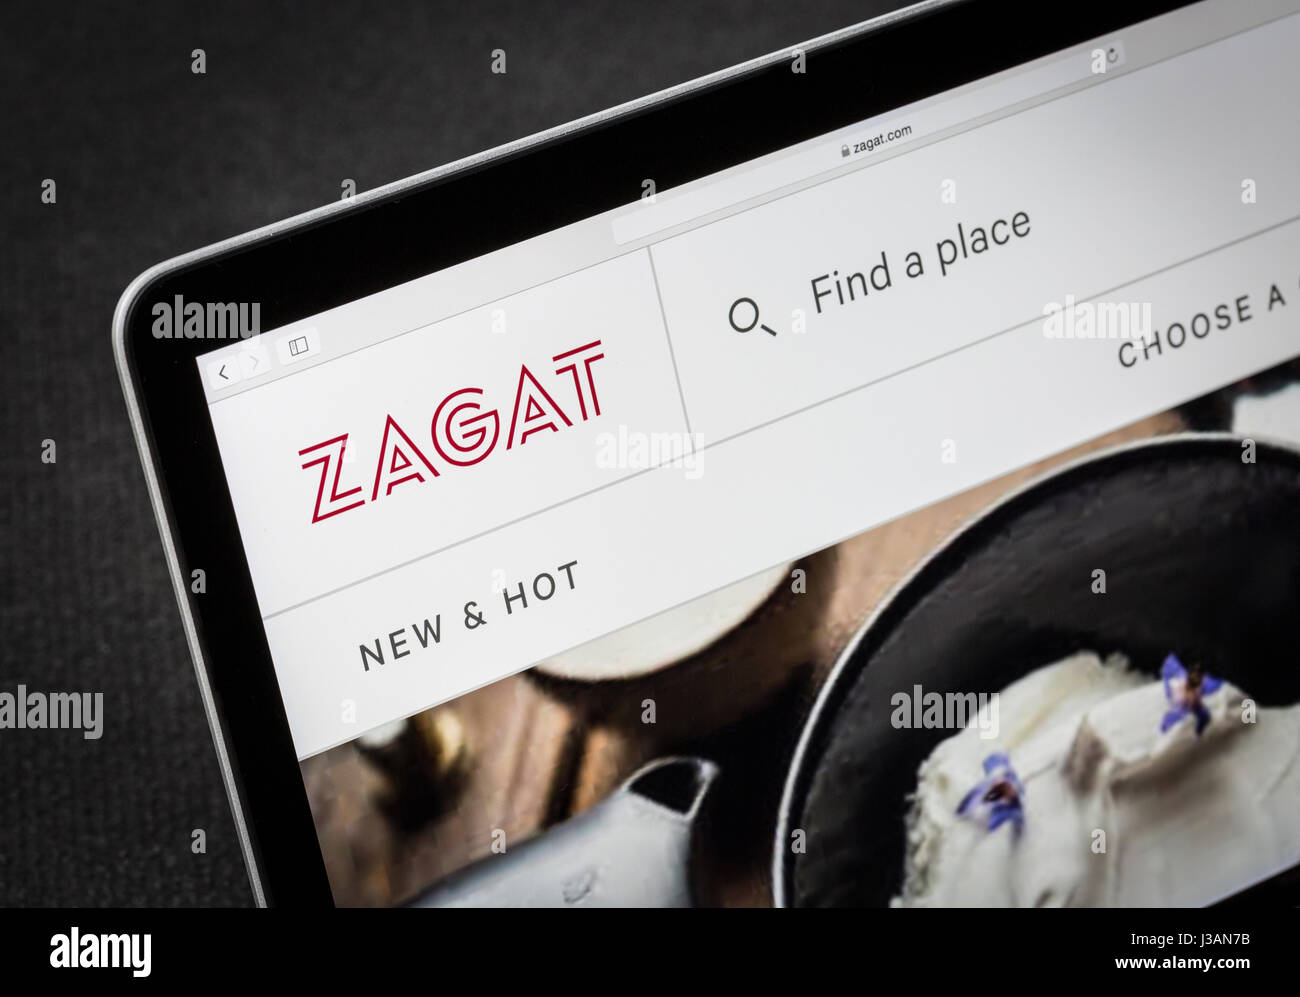 Zagat.com Zagat website Stock Photo